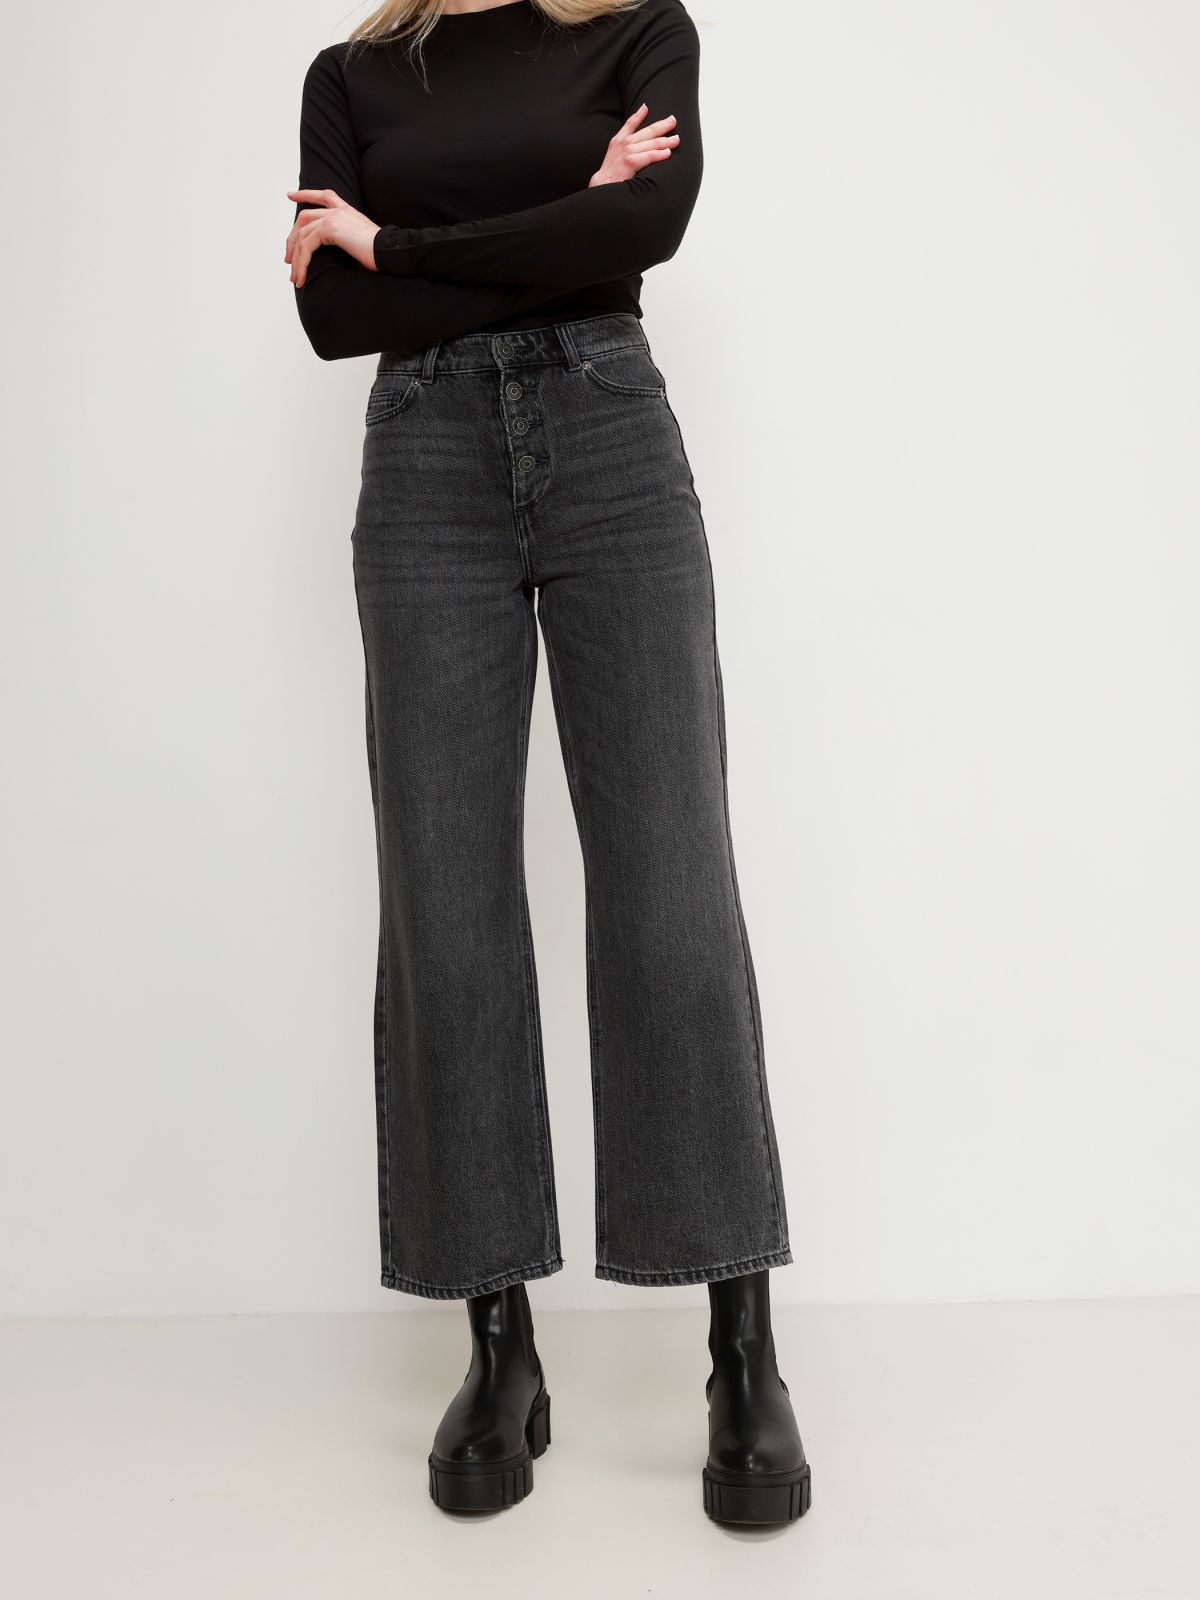  ג'ינס ווש בגזרה ישרה / נשים של ONLY